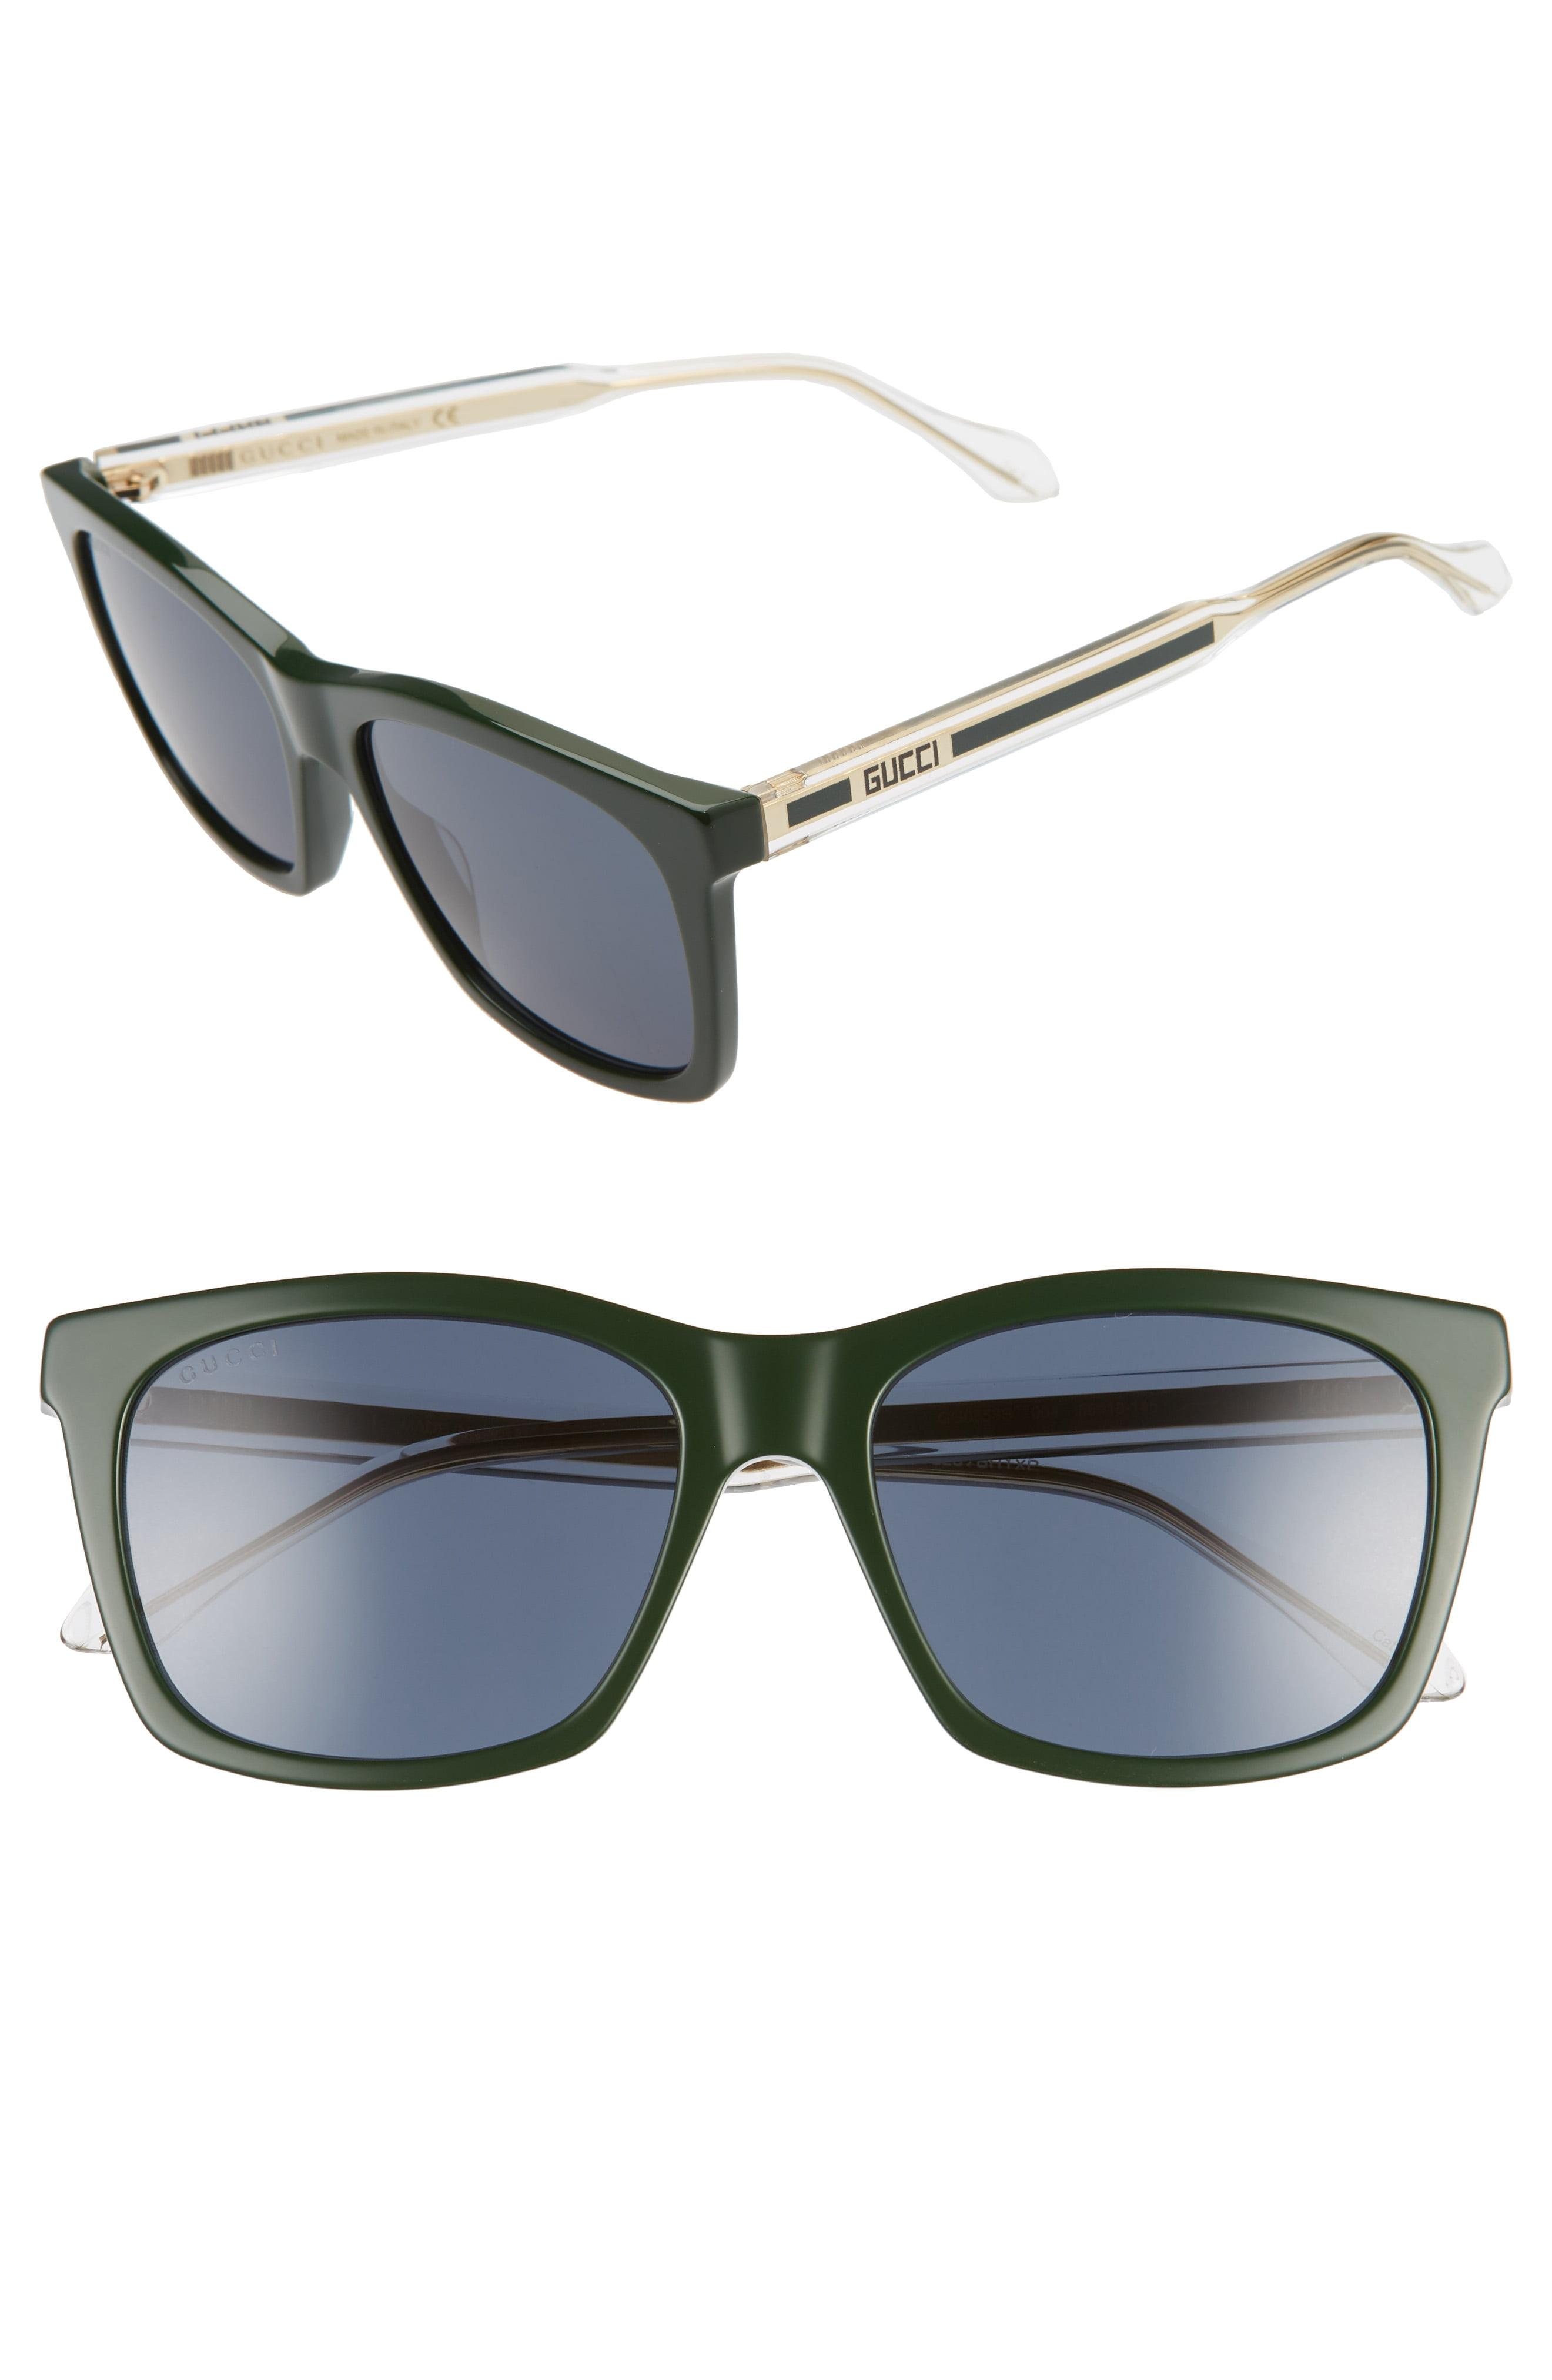 Gucci 56mm Square Sunglasses in Green for Men - Lyst